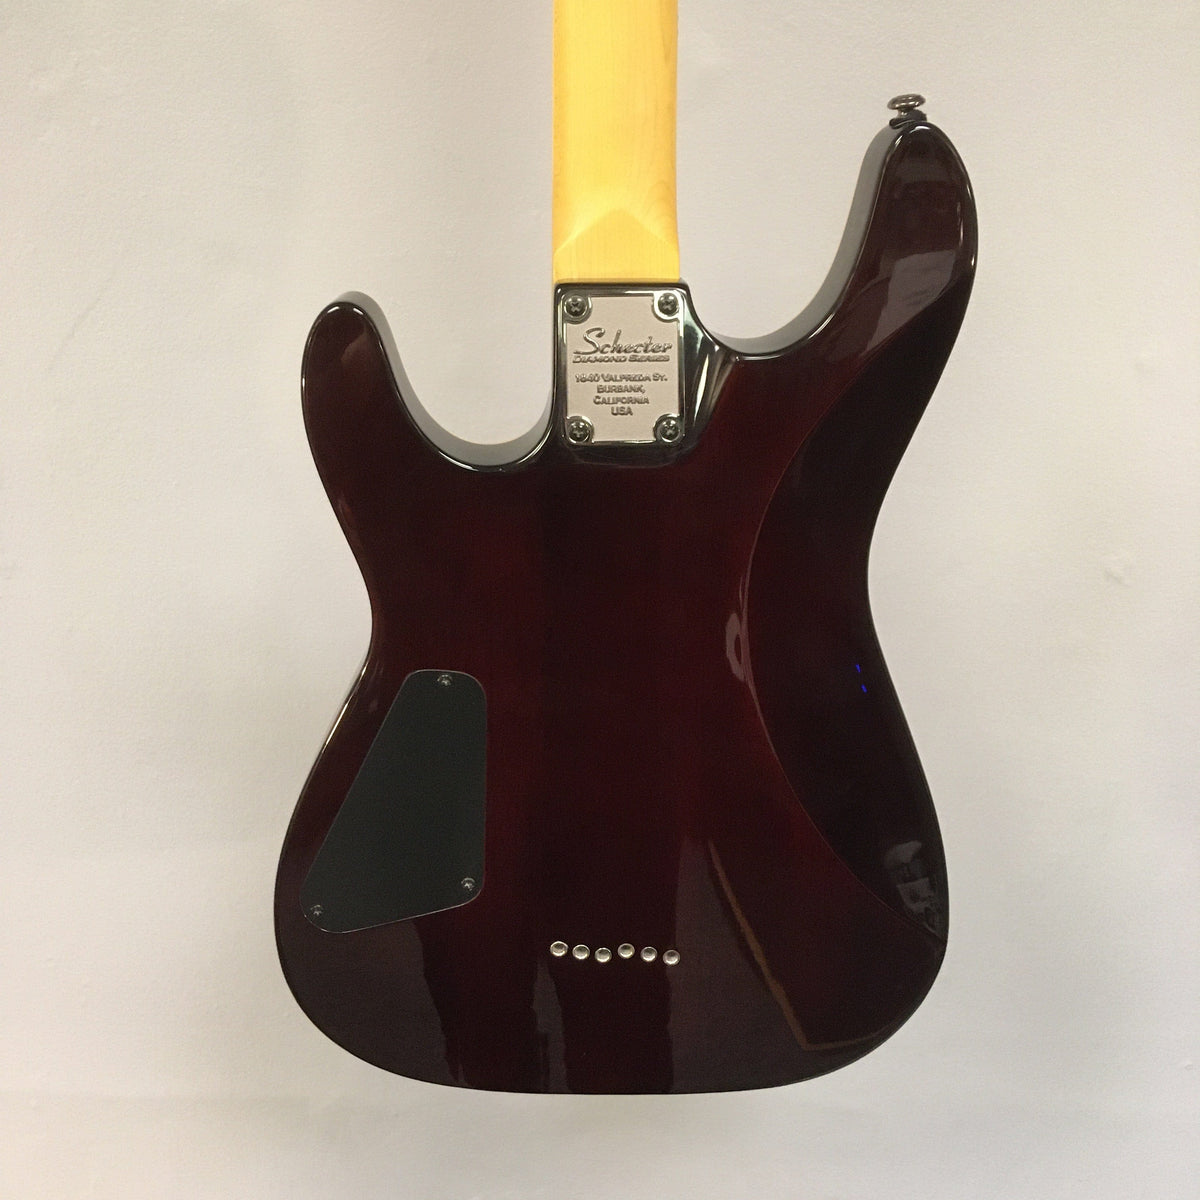 Schecter Omen Extreme-6 Vintage Sunburst Used Guitars on...